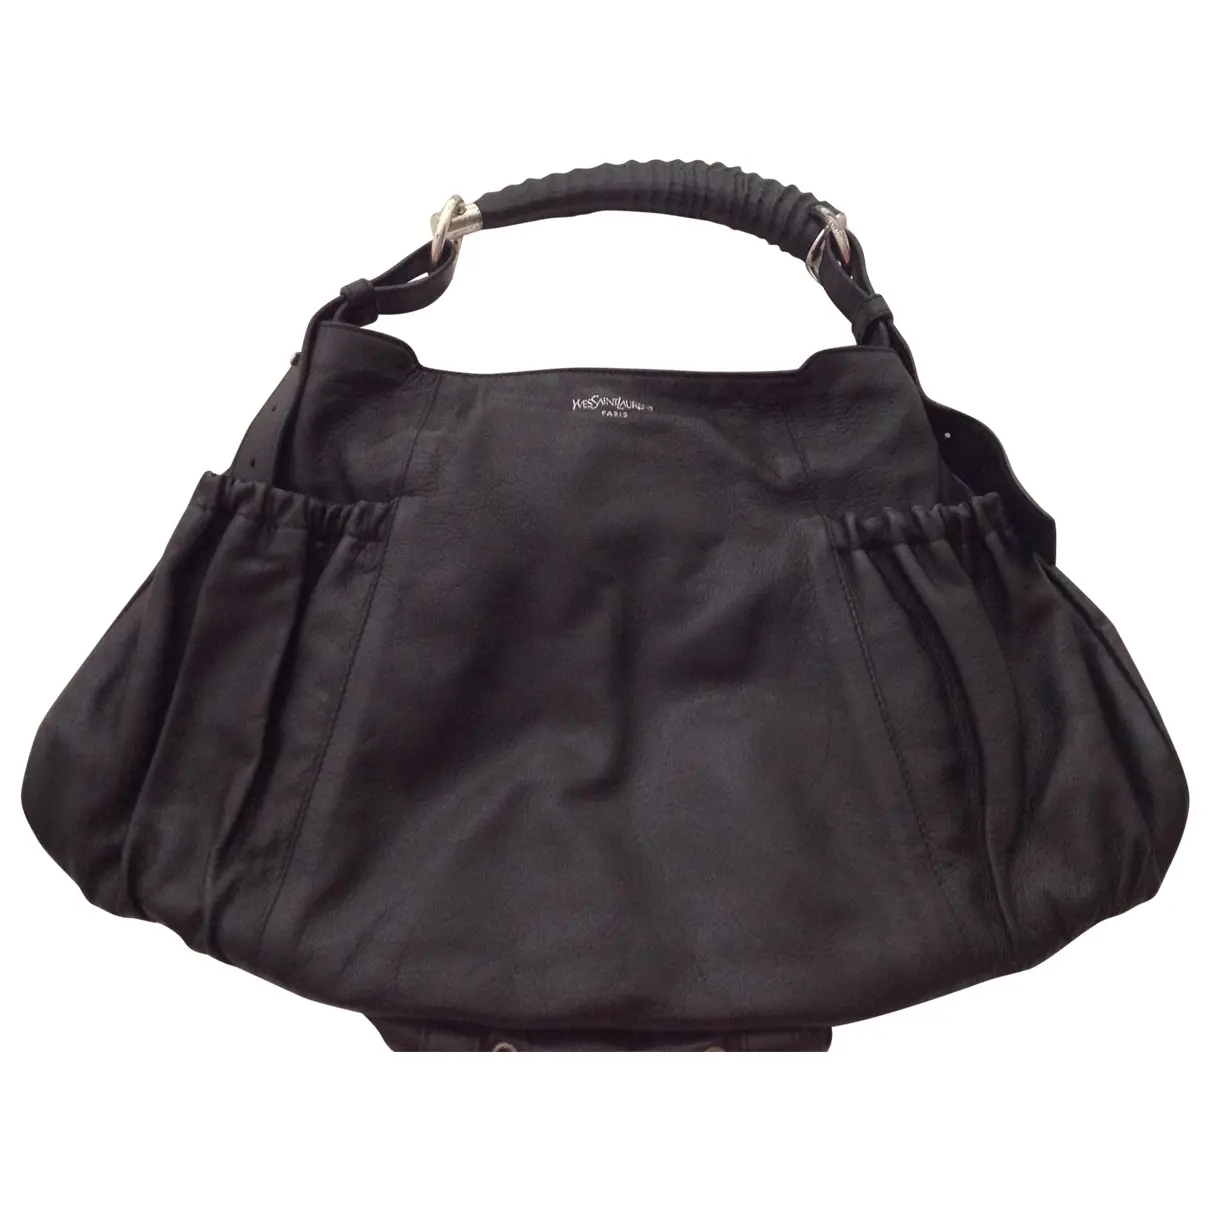 Yves Saint Laurent Black Leather Handbag for sale